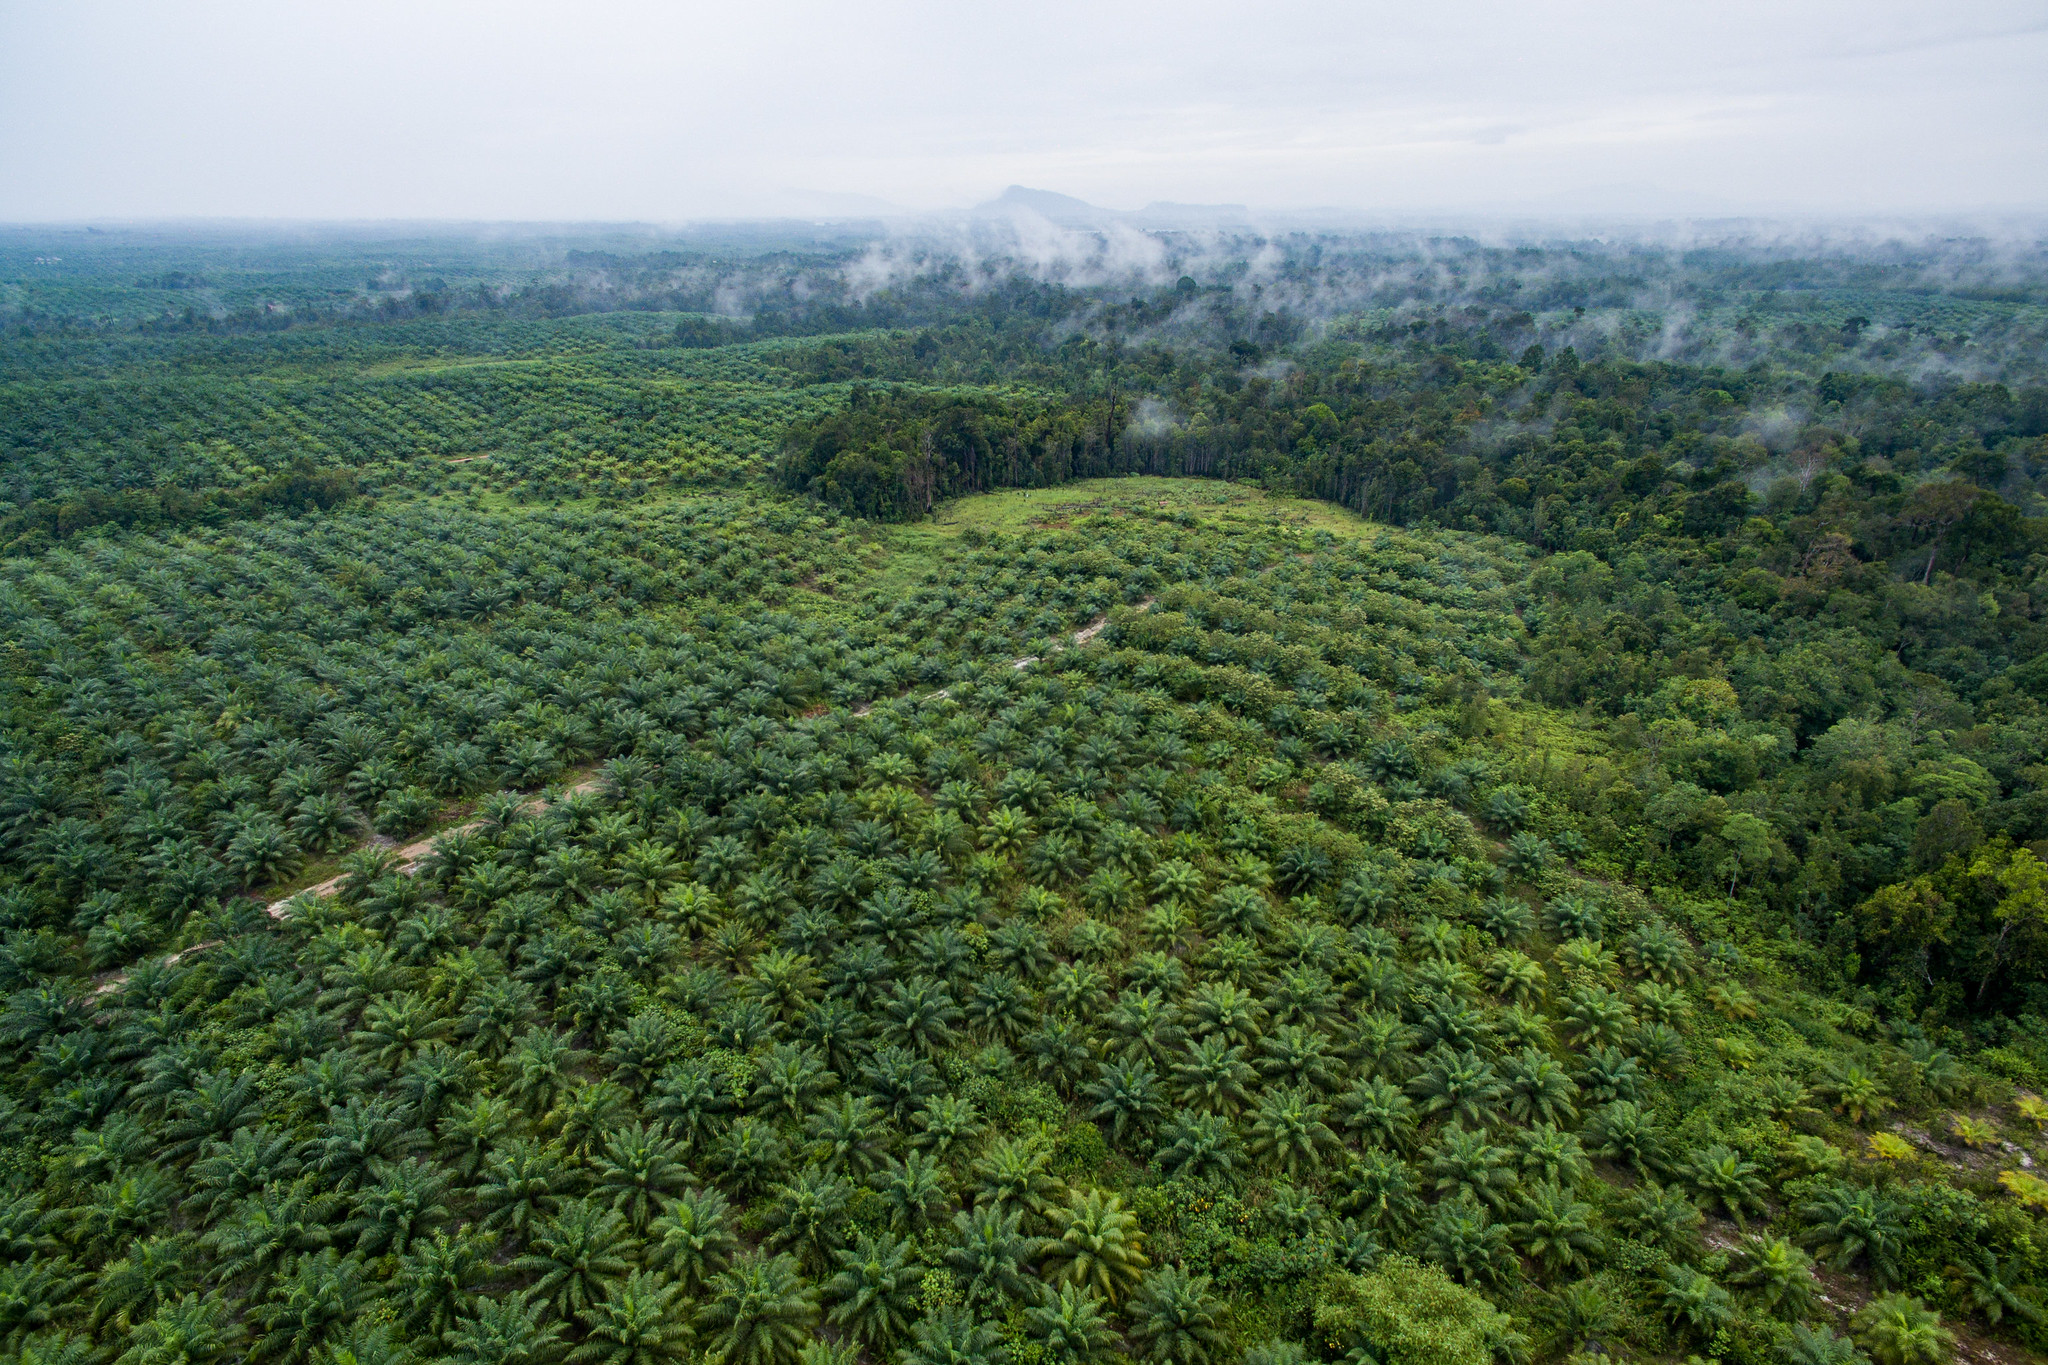 Can palm oil enter the circular economy?